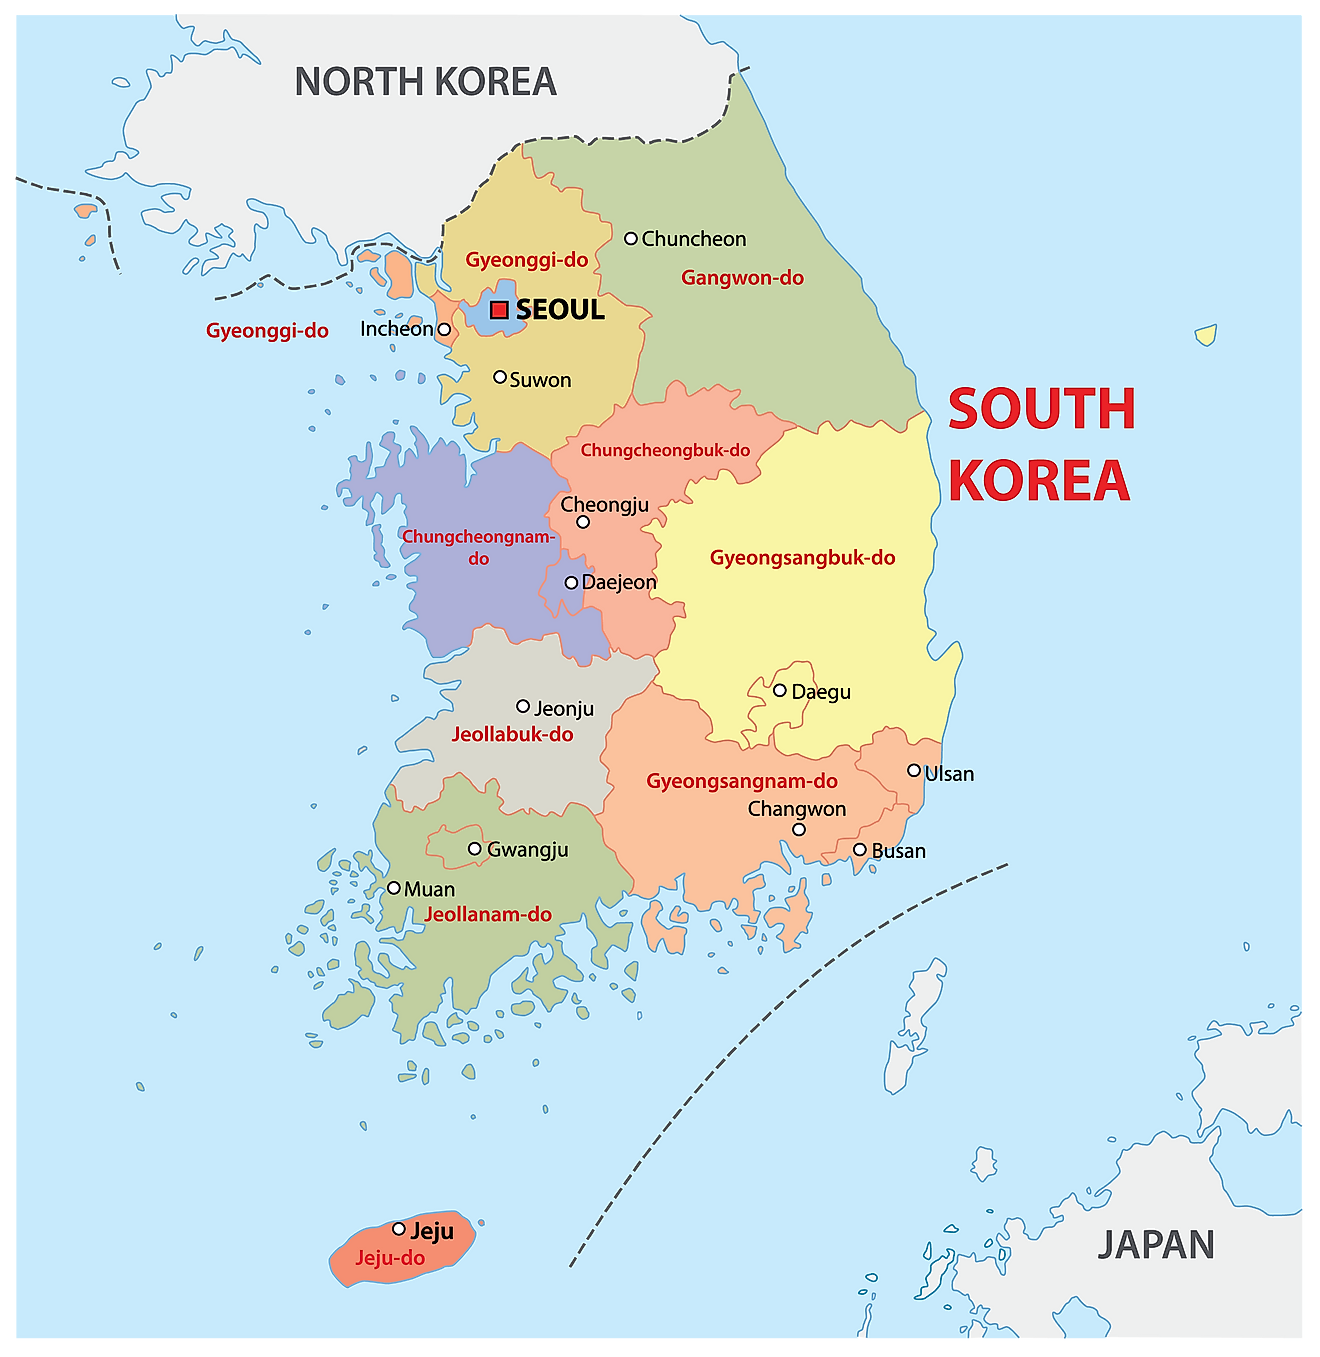 South Korea States Map South Korea Maps & Facts - World Atlas